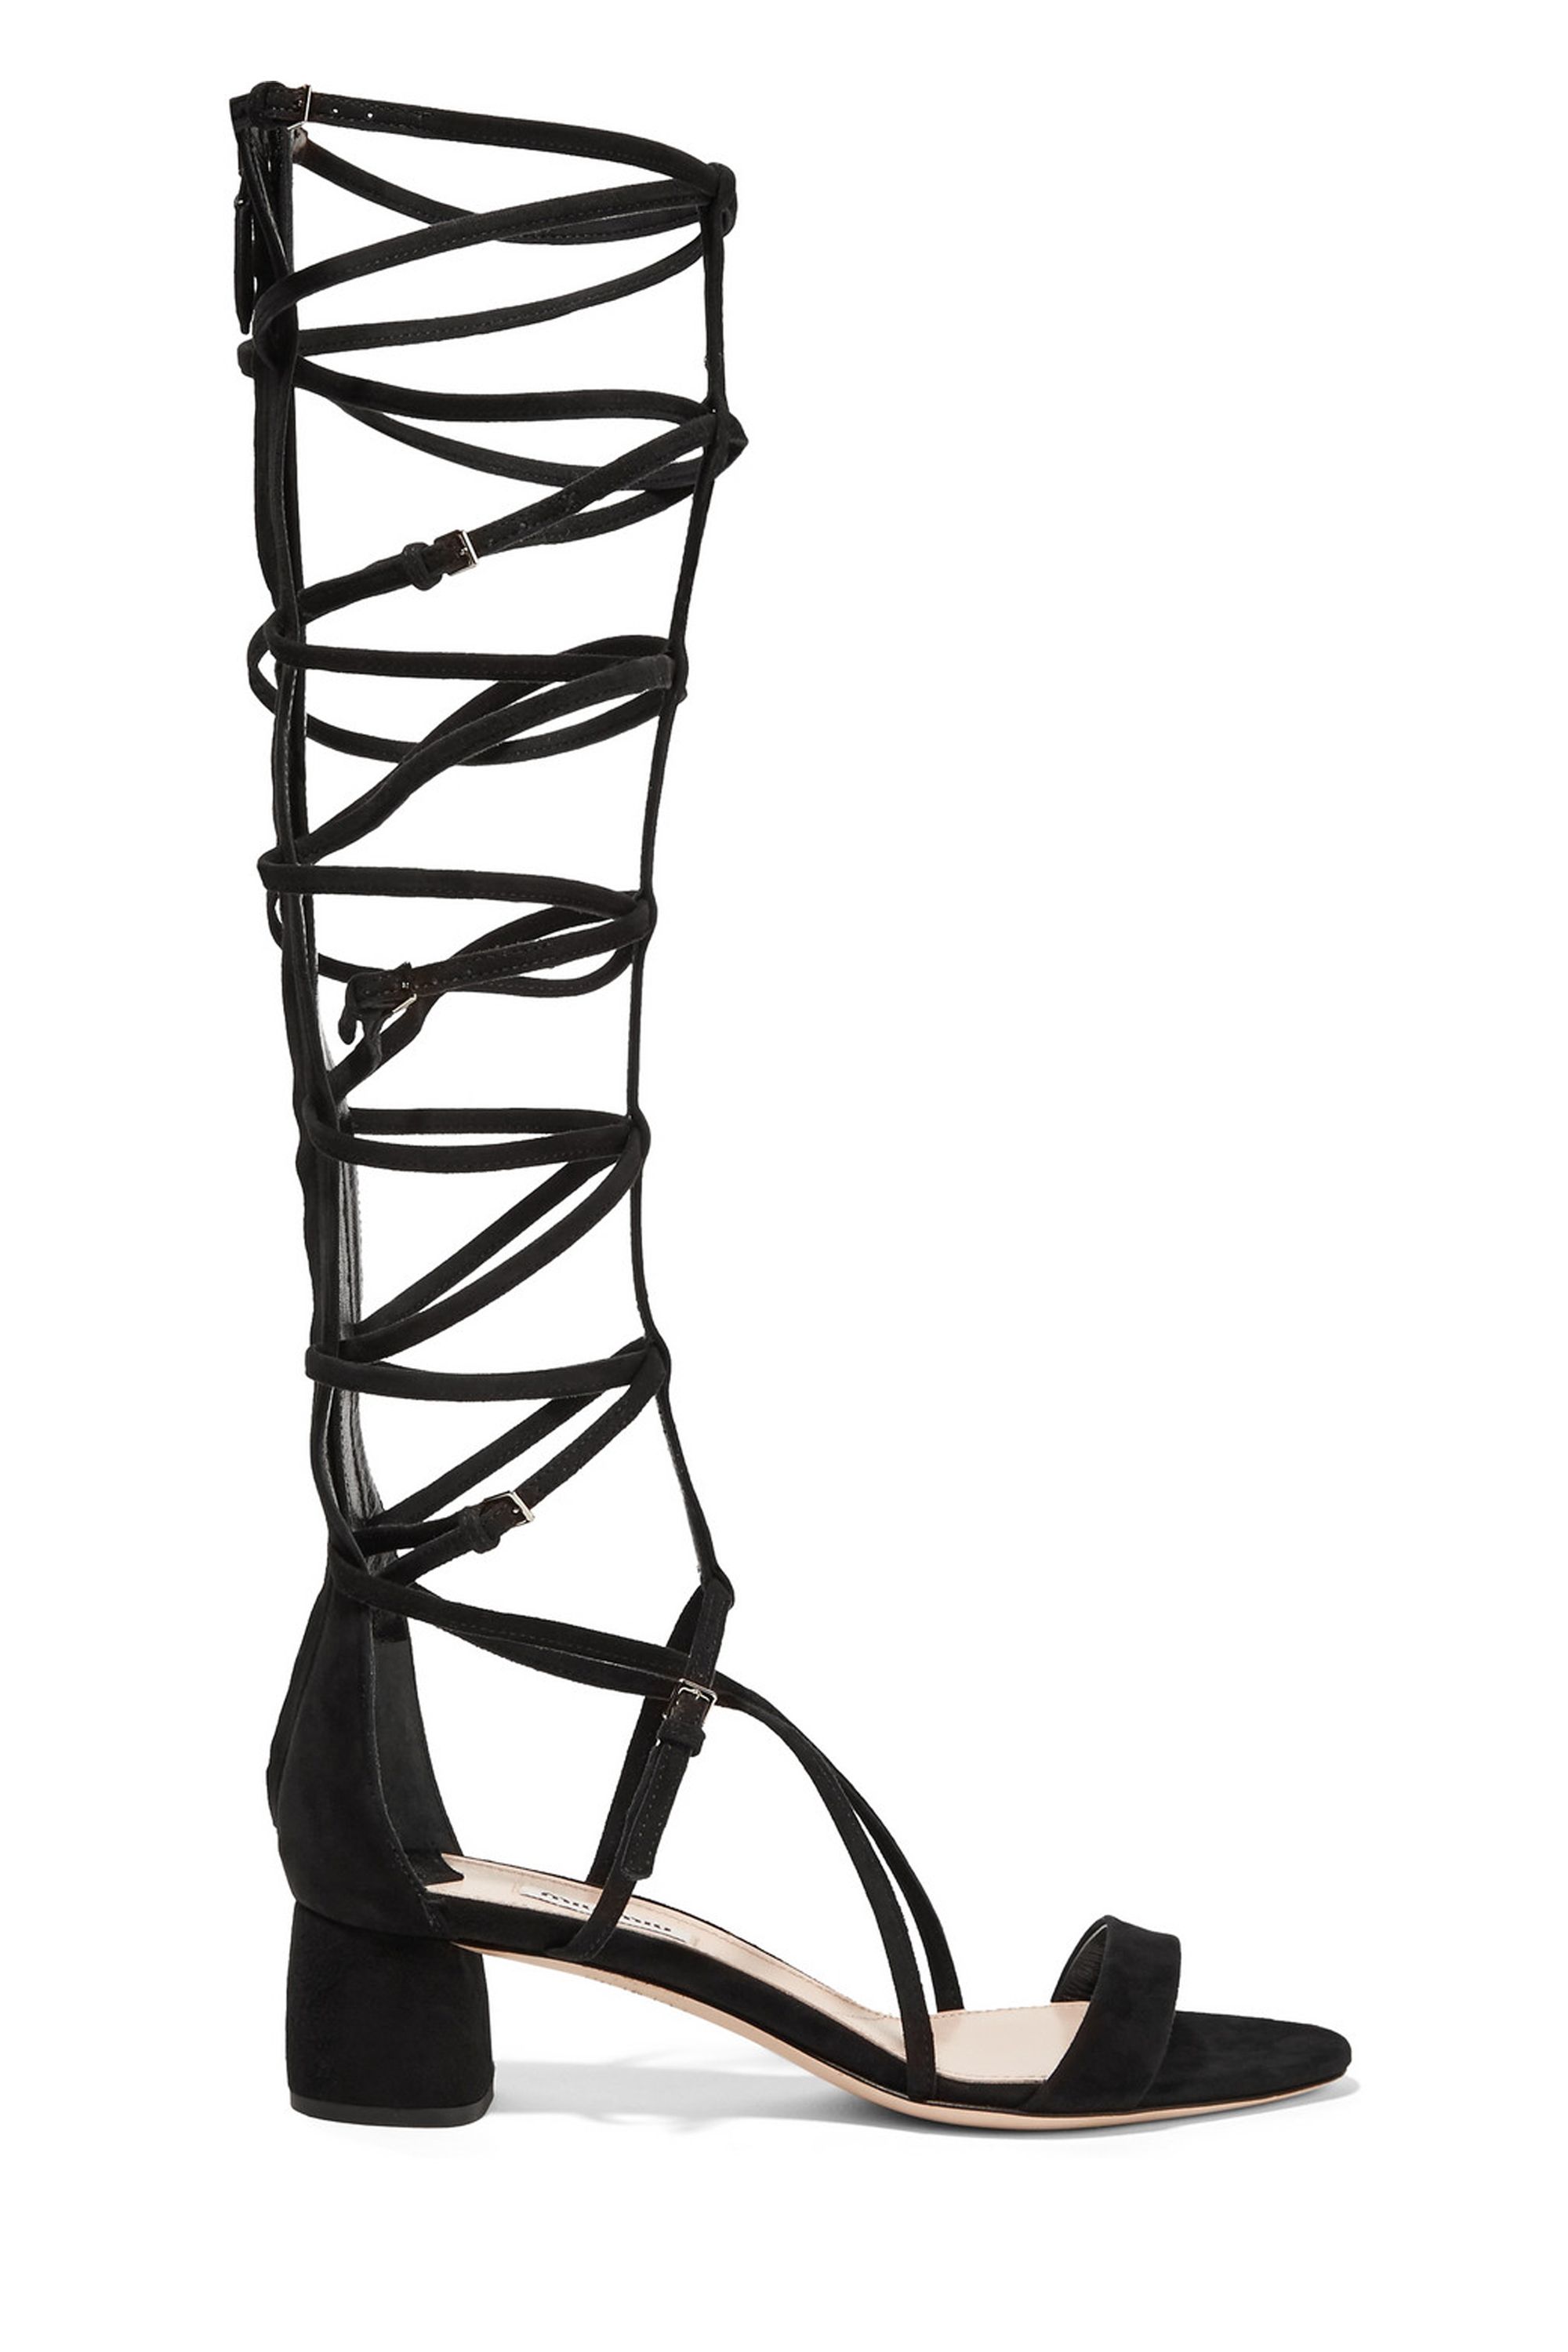 FRANCO Sarto Julienne Gladiator Zip Up Strappy Block Heel Sandals in Tan  Size 9 | Strappy block heel sandals, Block heels sandal, Strappy block heels